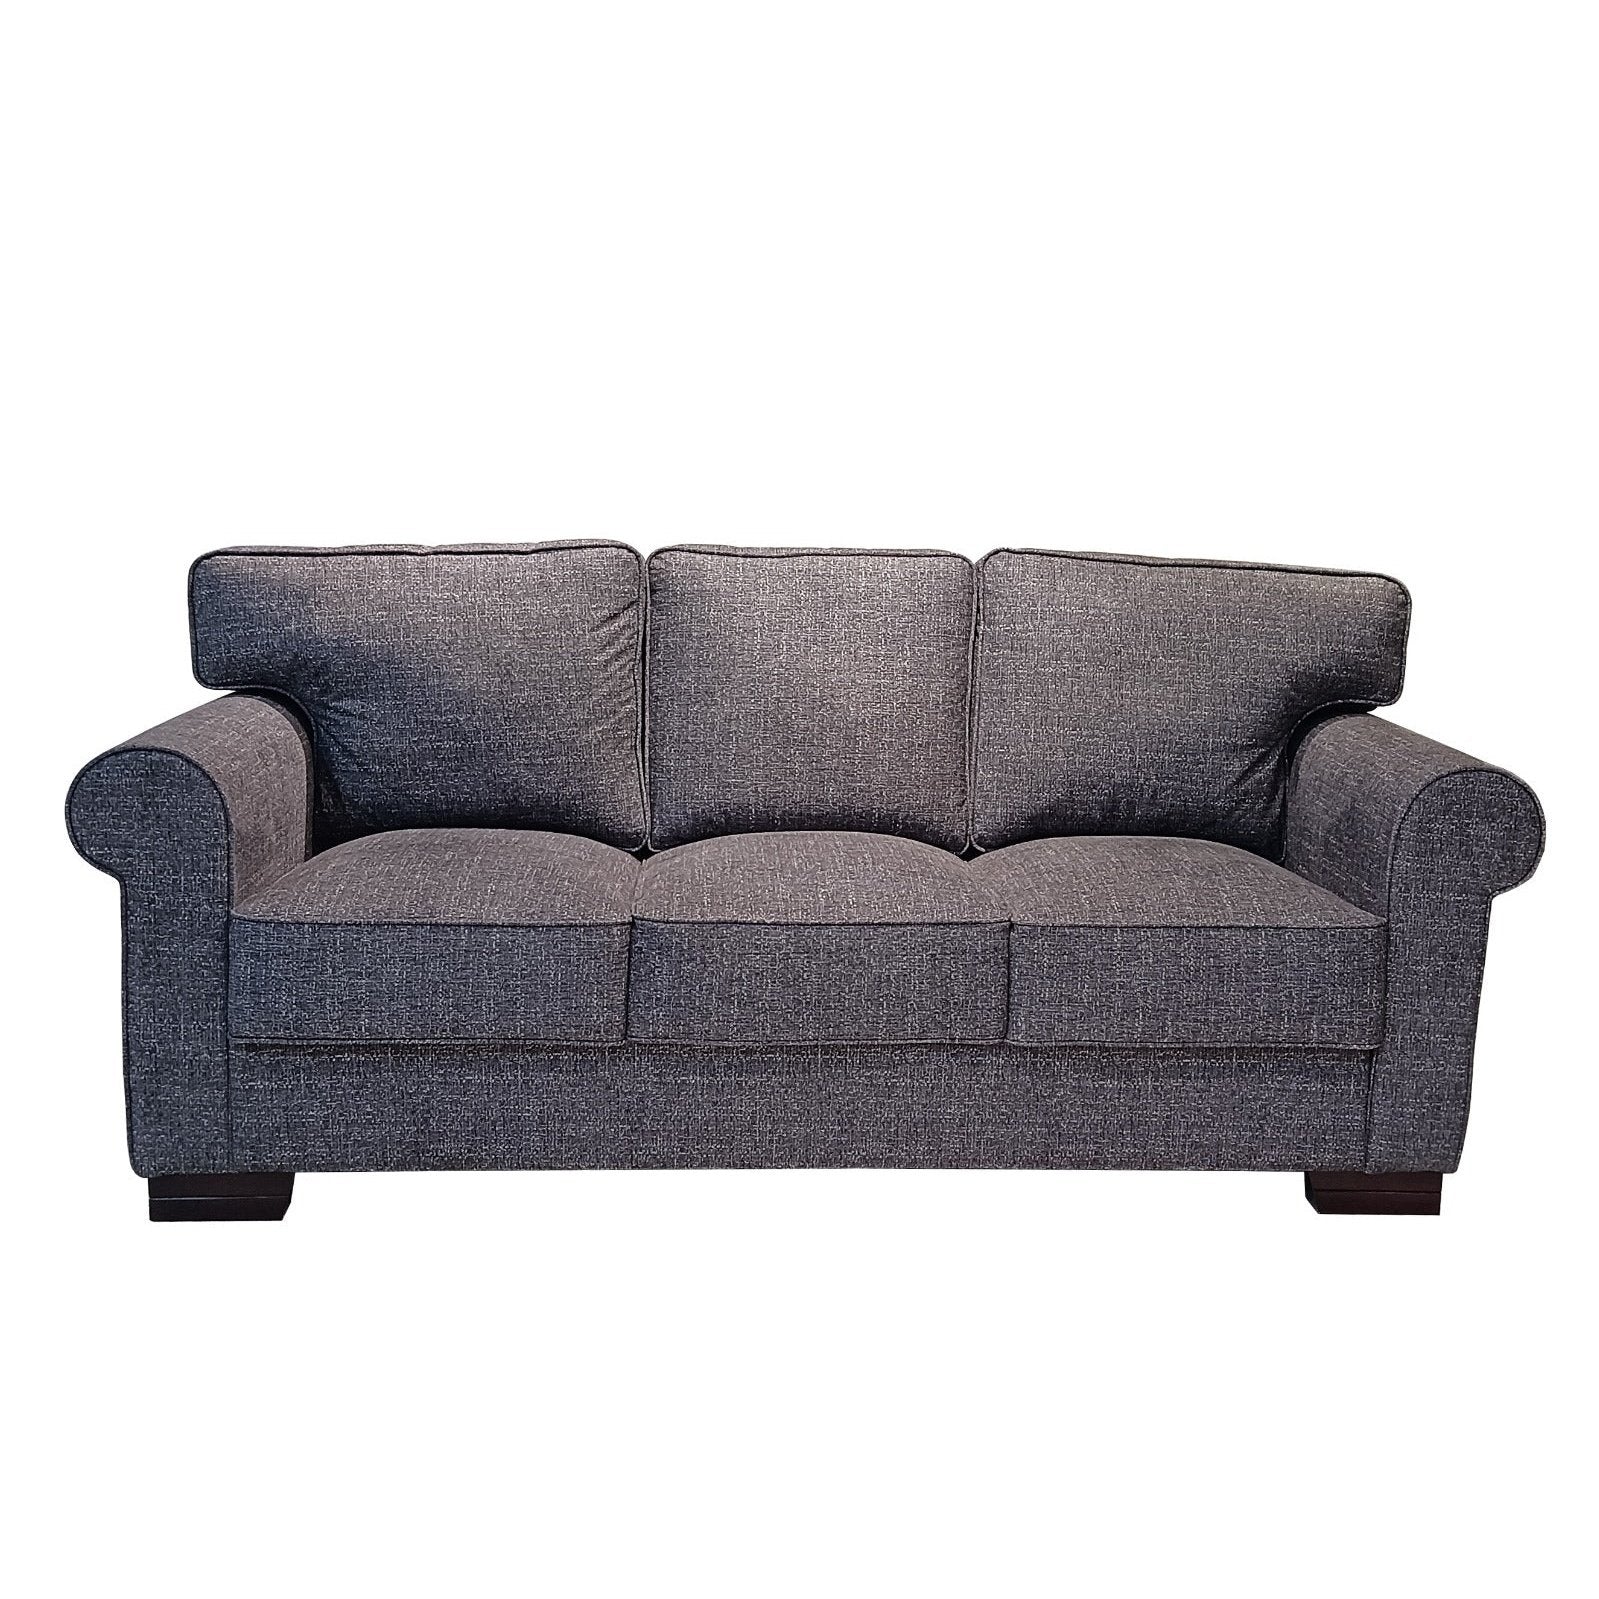 VR-187 ORLANDO SOFA SET 3+2 MoBEL Furniture